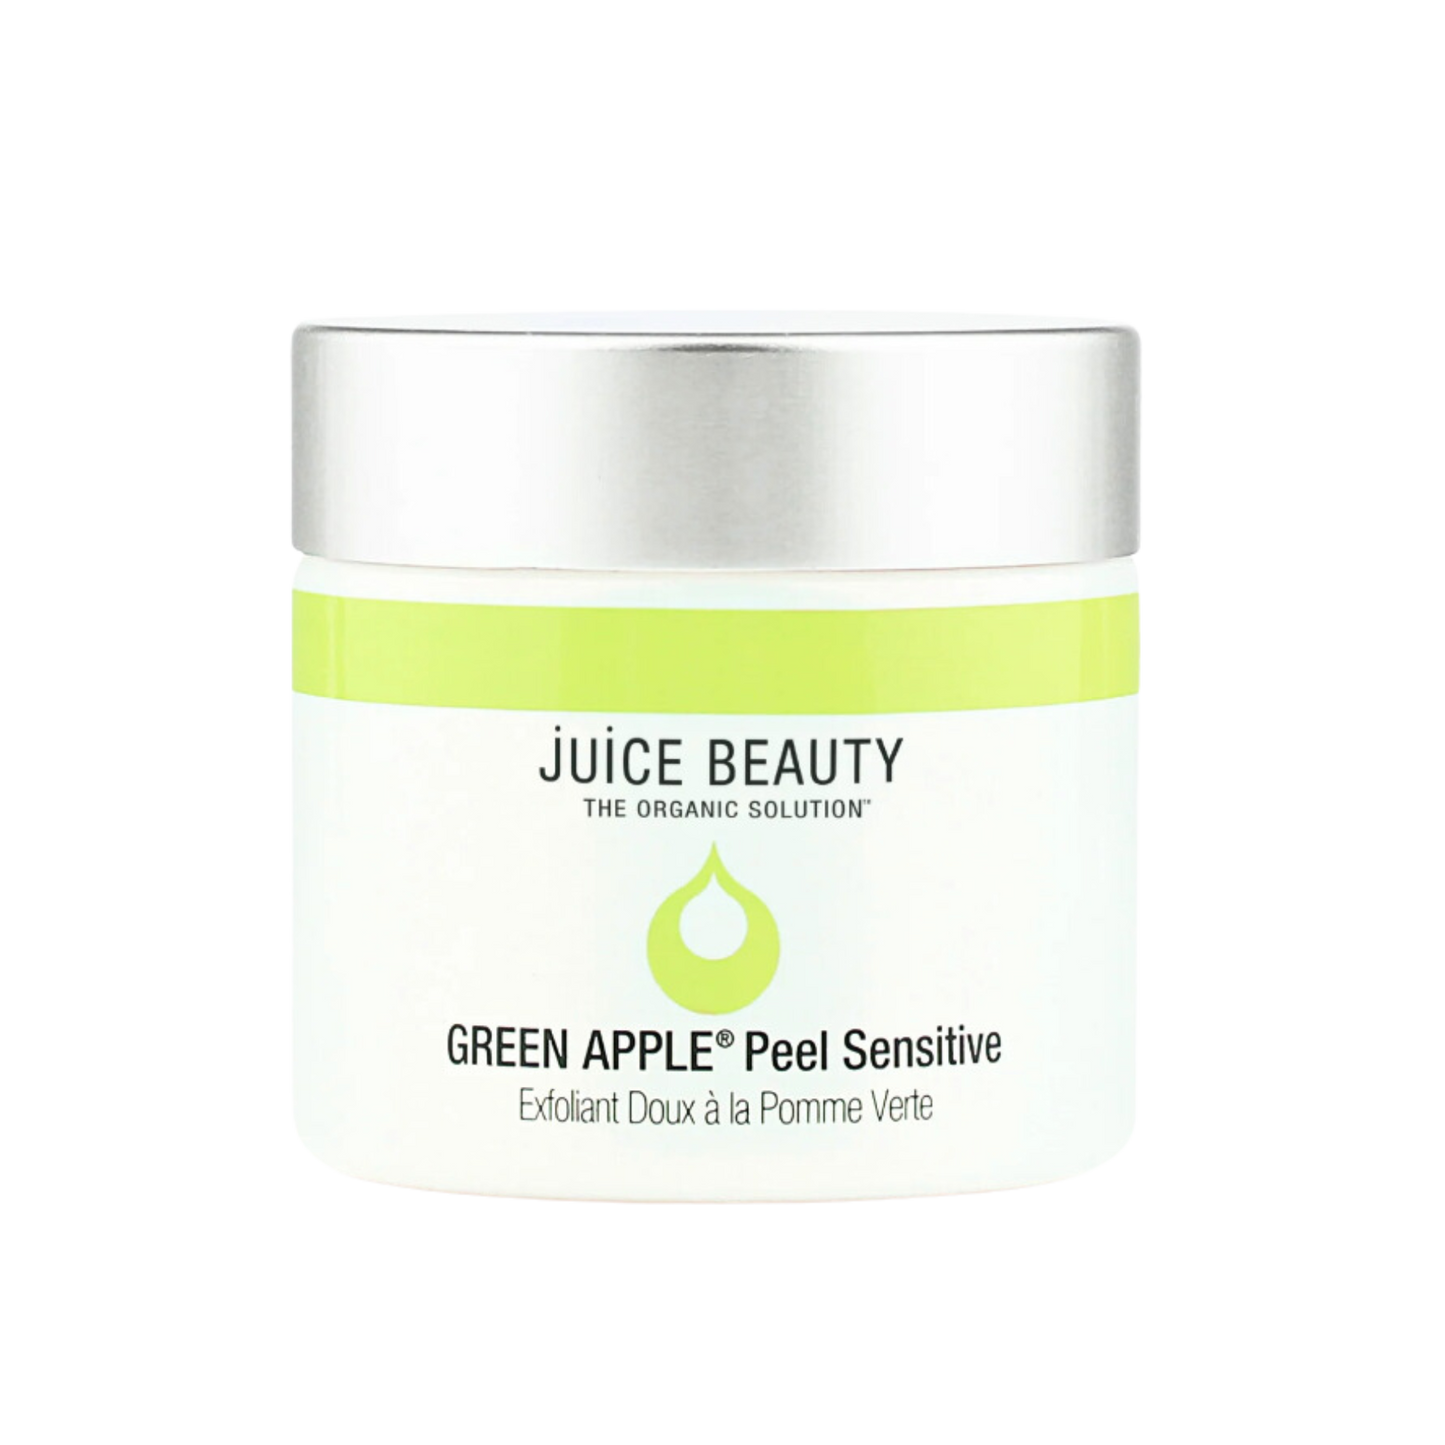 Juice Beauty Peel Sensitive Exfoliating Mask